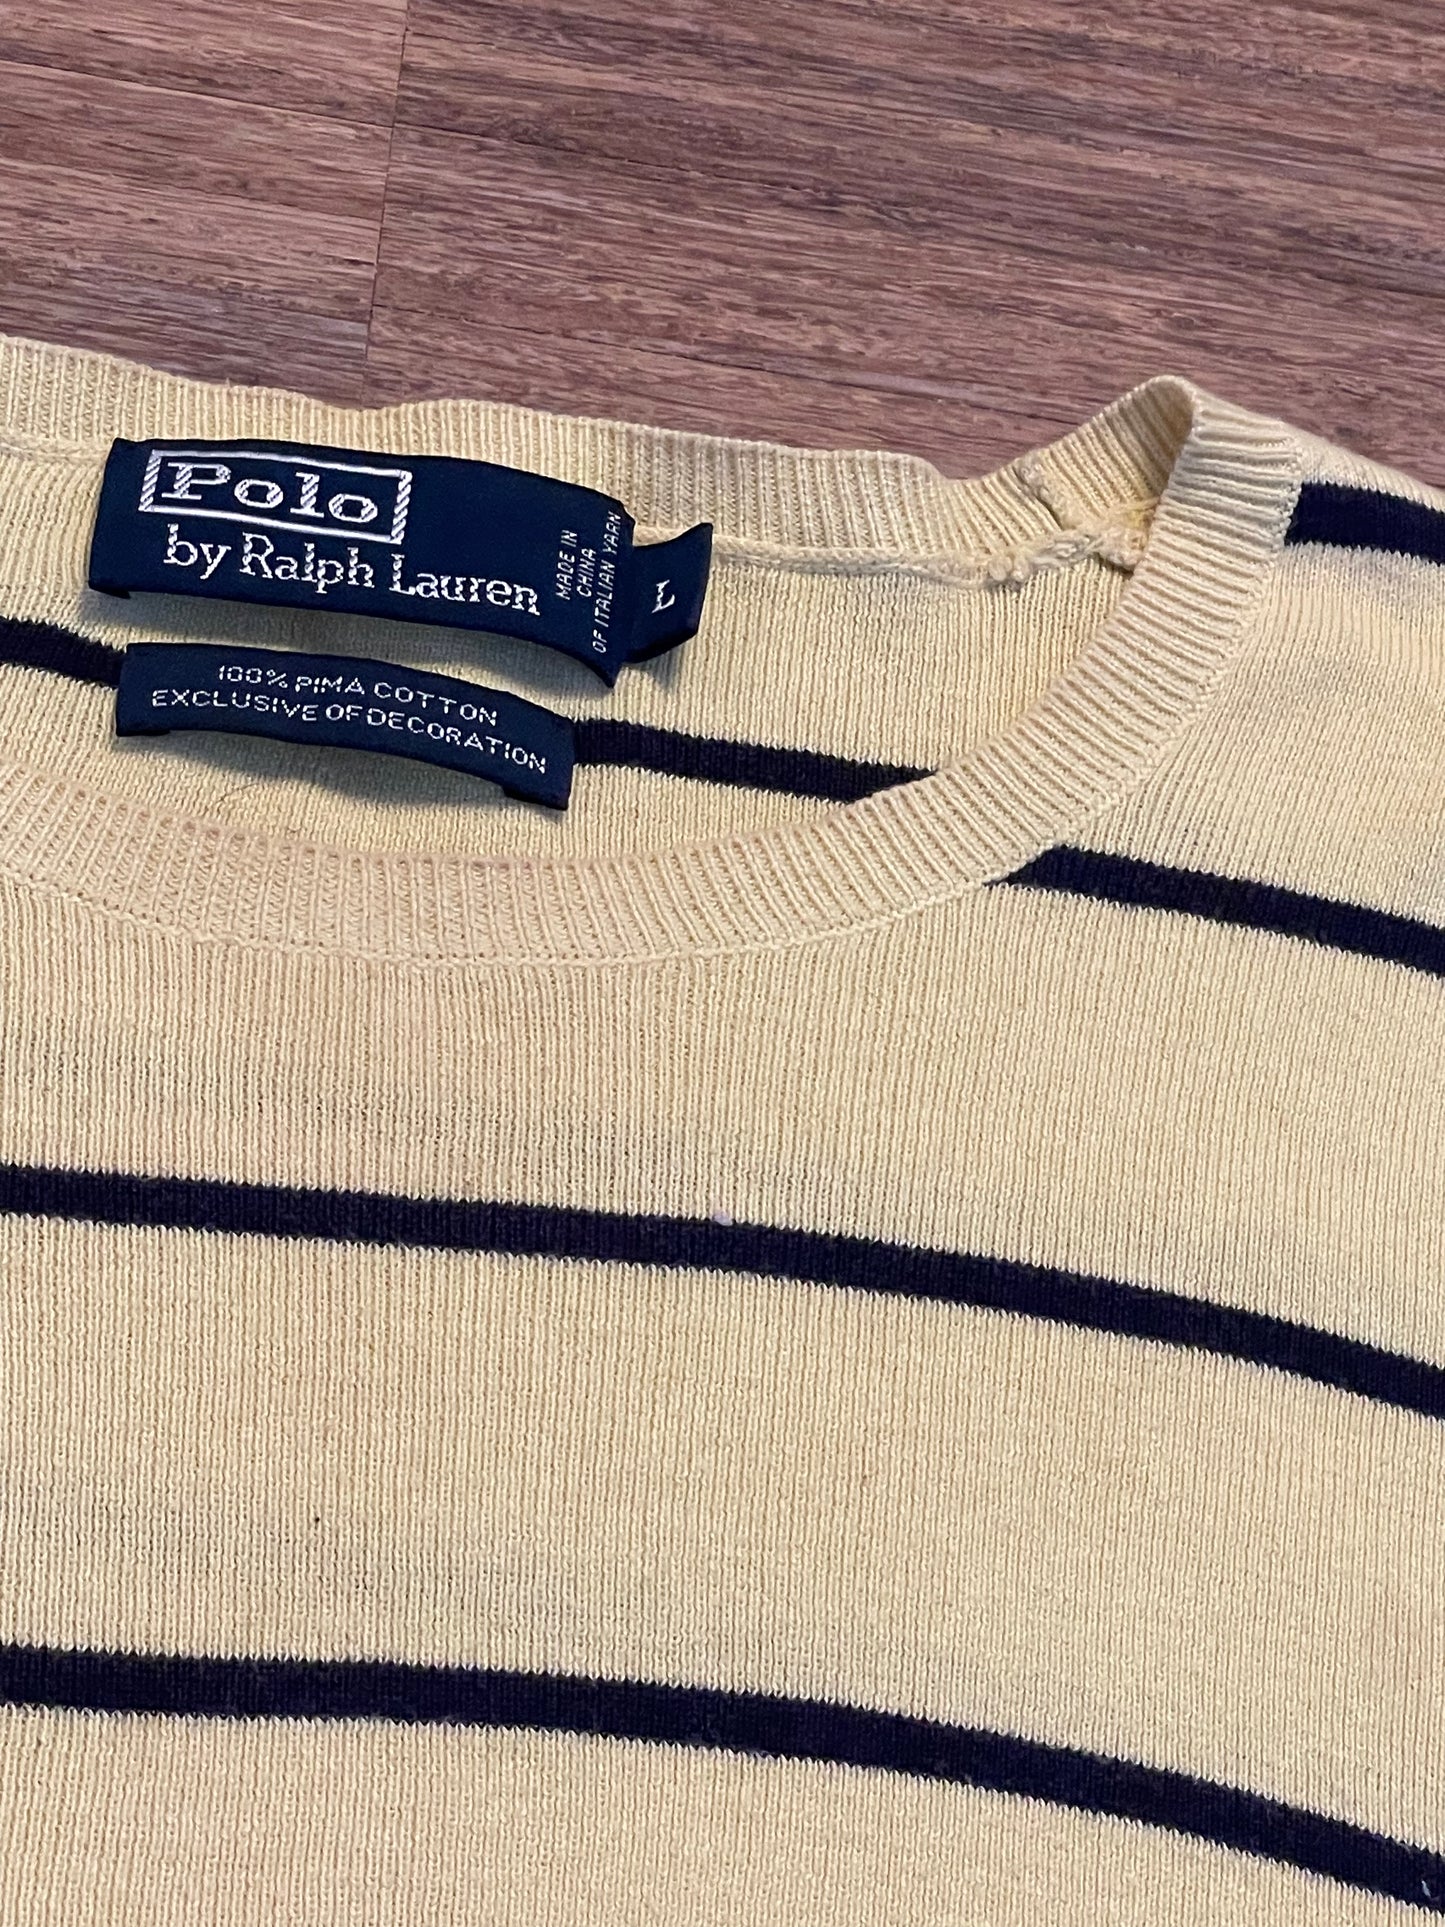 Polo Ralph Lauren Sweater (M-L)